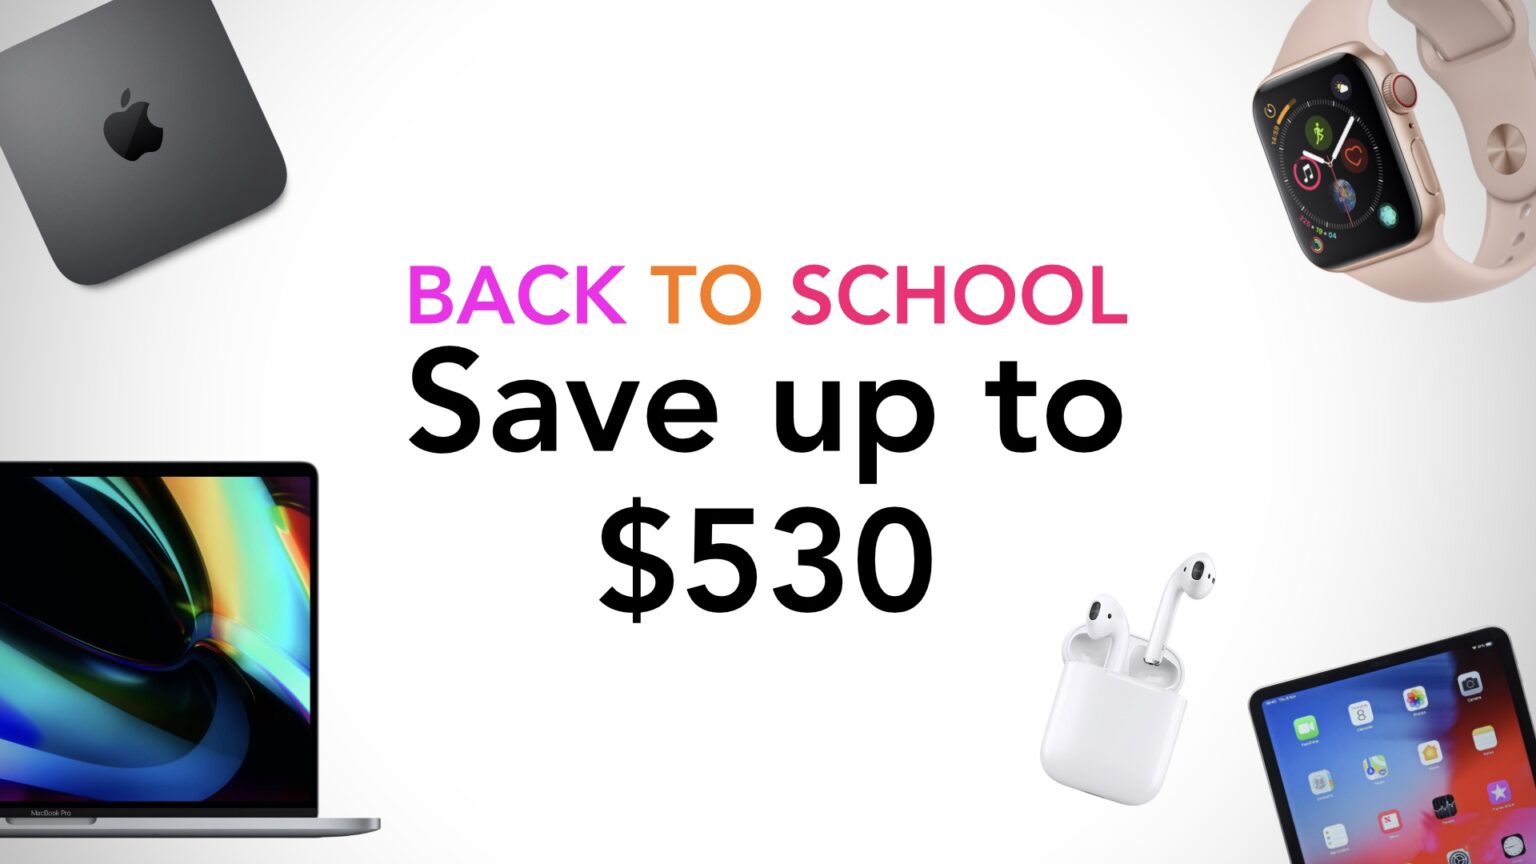 Back to School sale on iPad, Mac